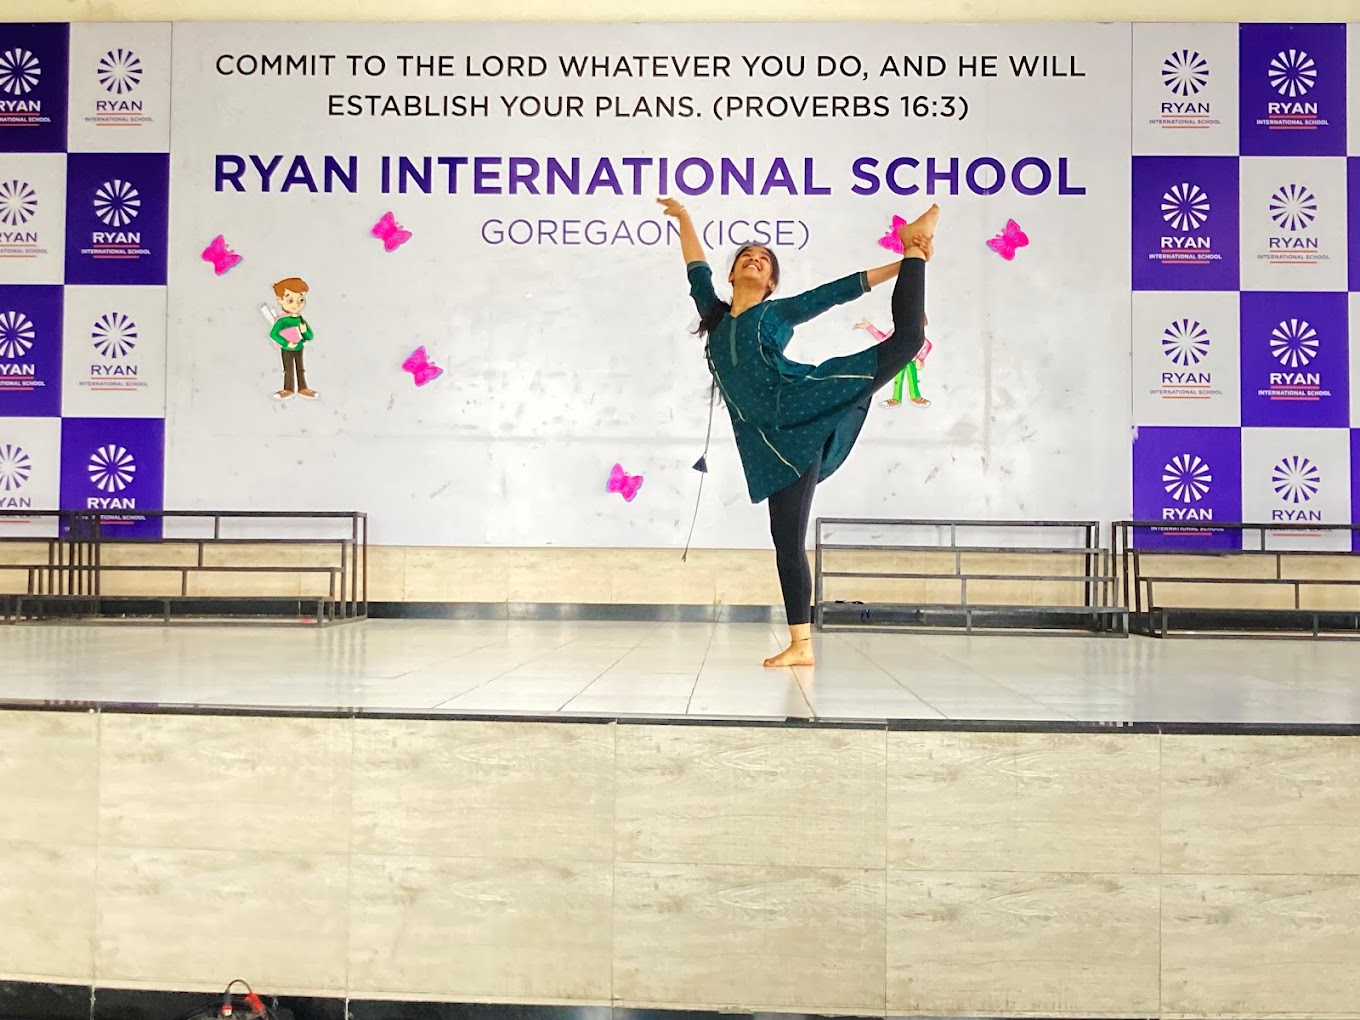 Ryan-International-School-goregoan-image.jpg